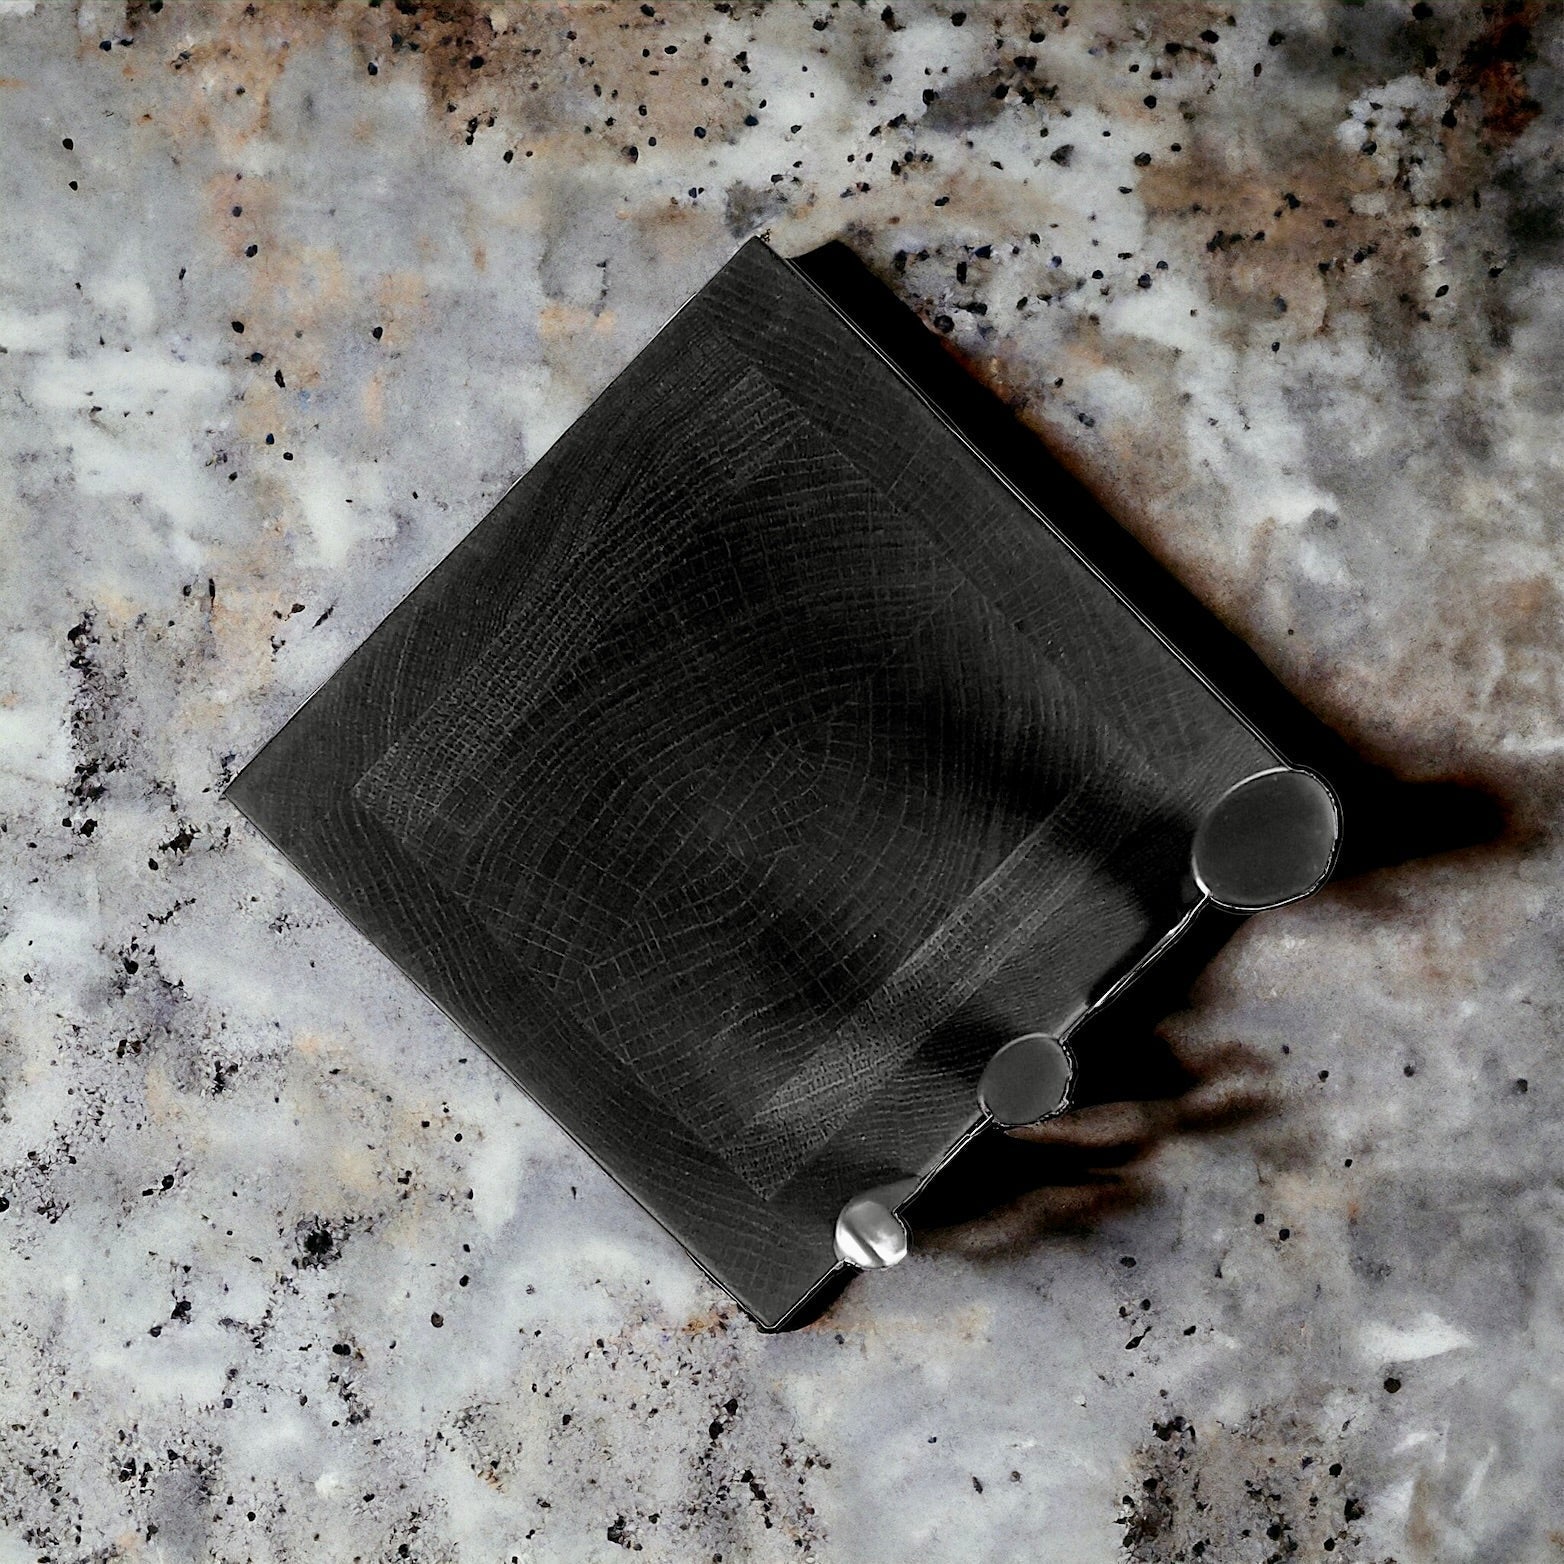 Rune-Jakobsen Woodworks 'Nordic Noir' sortbejdset magnetisk knivblok_2 by Rune-Jakobsen Design